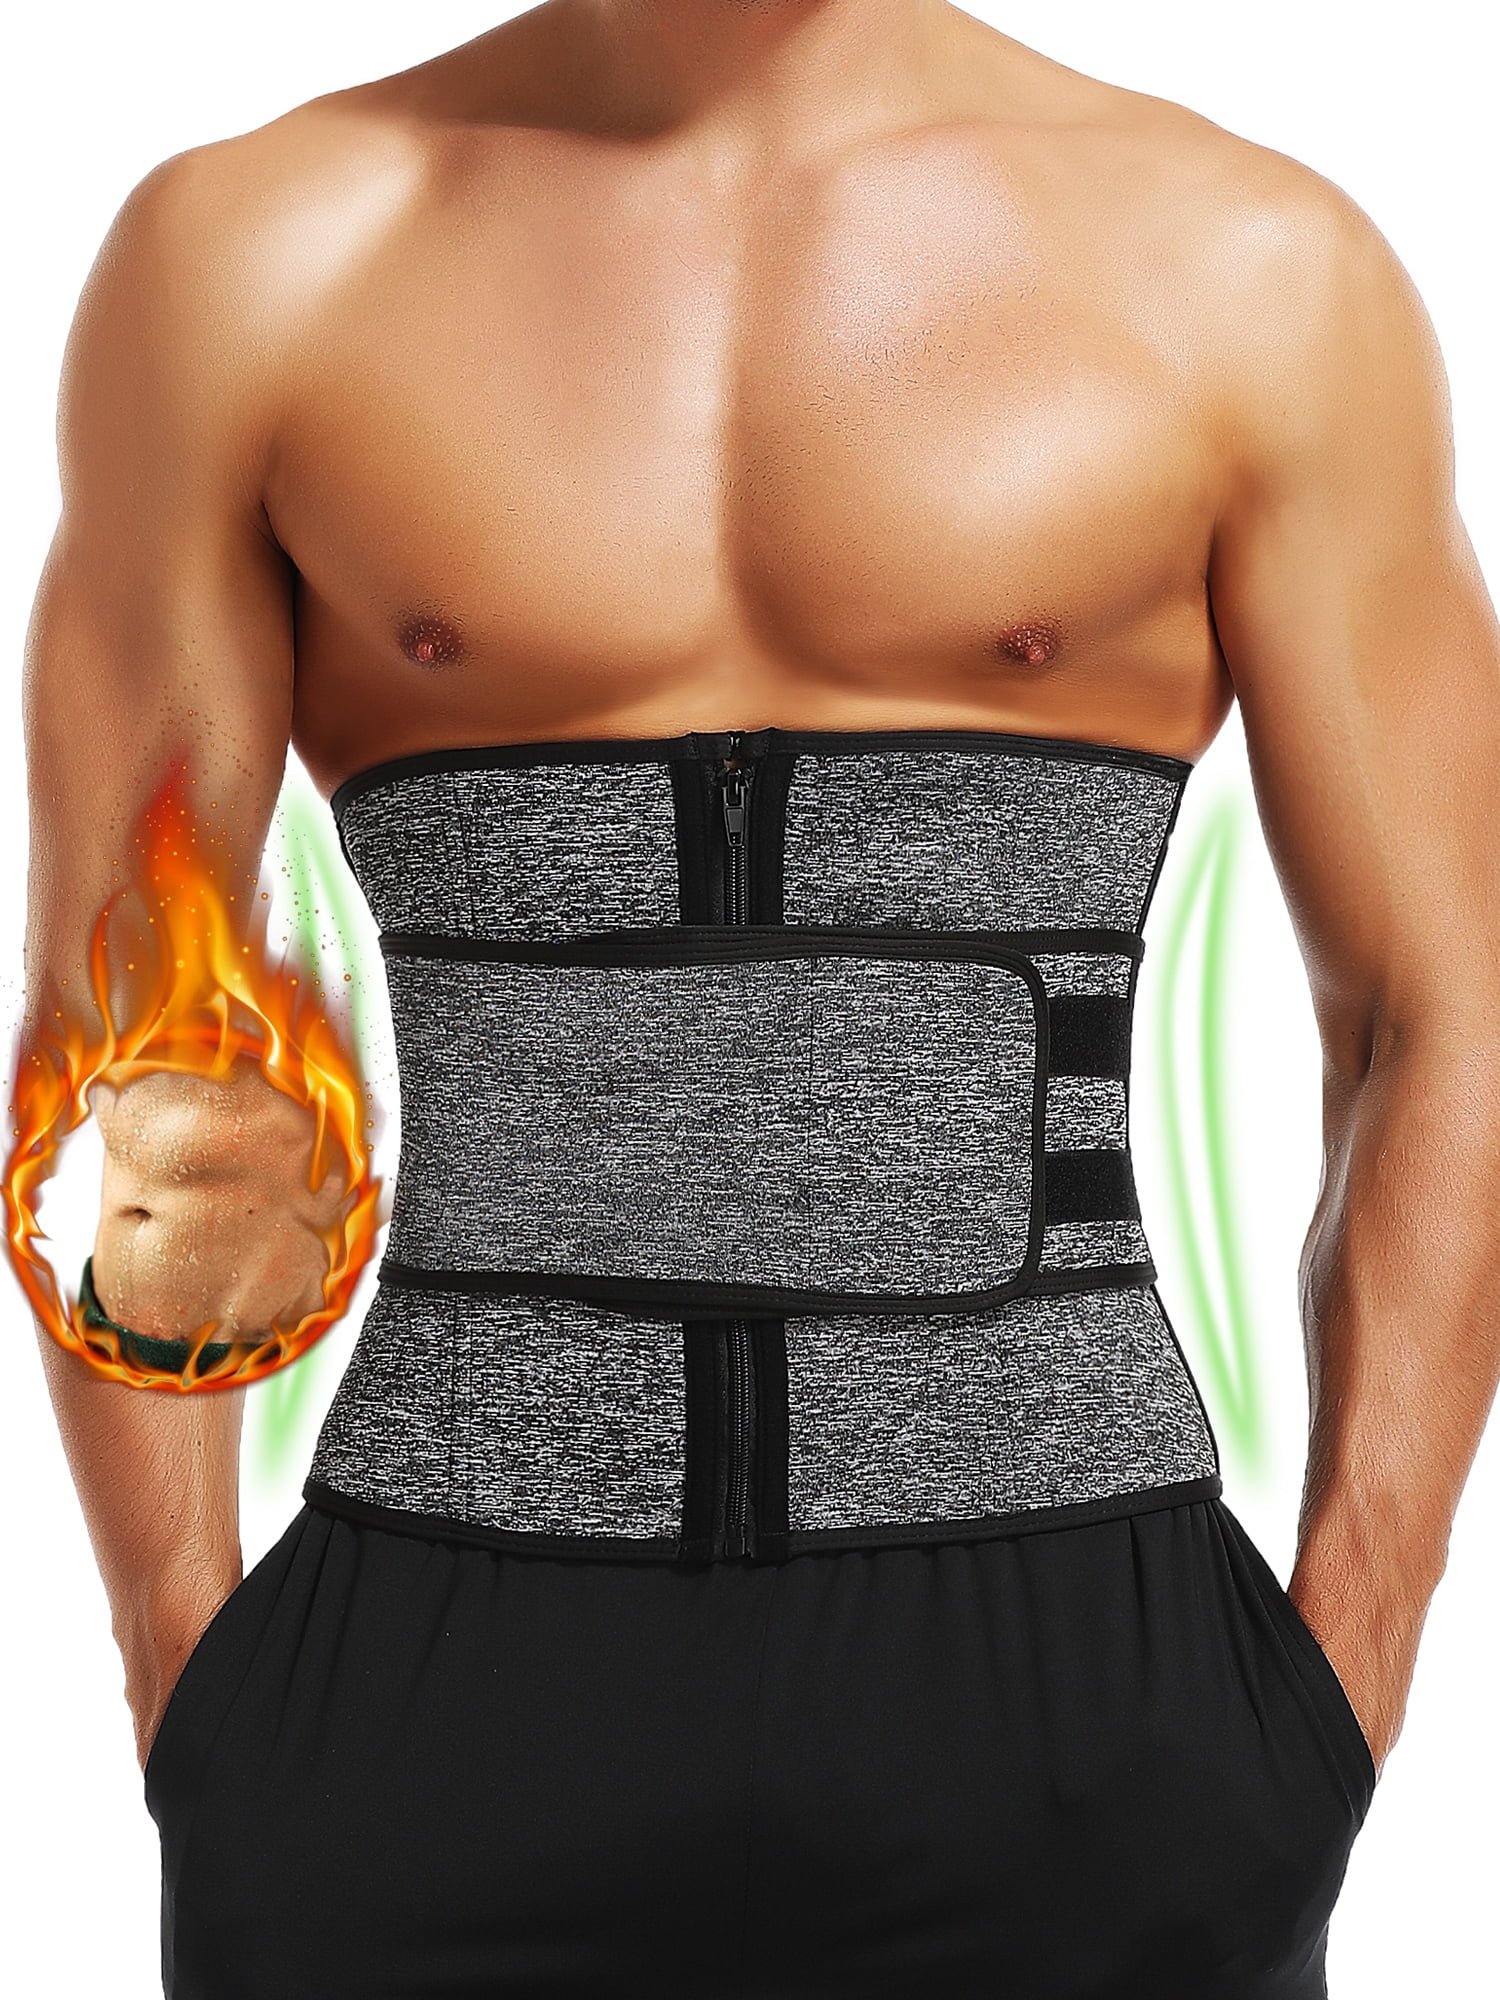 Men Waist Trainer Body Shaper Slimming Sweat Belt Tummy Control Band Fat Burner 